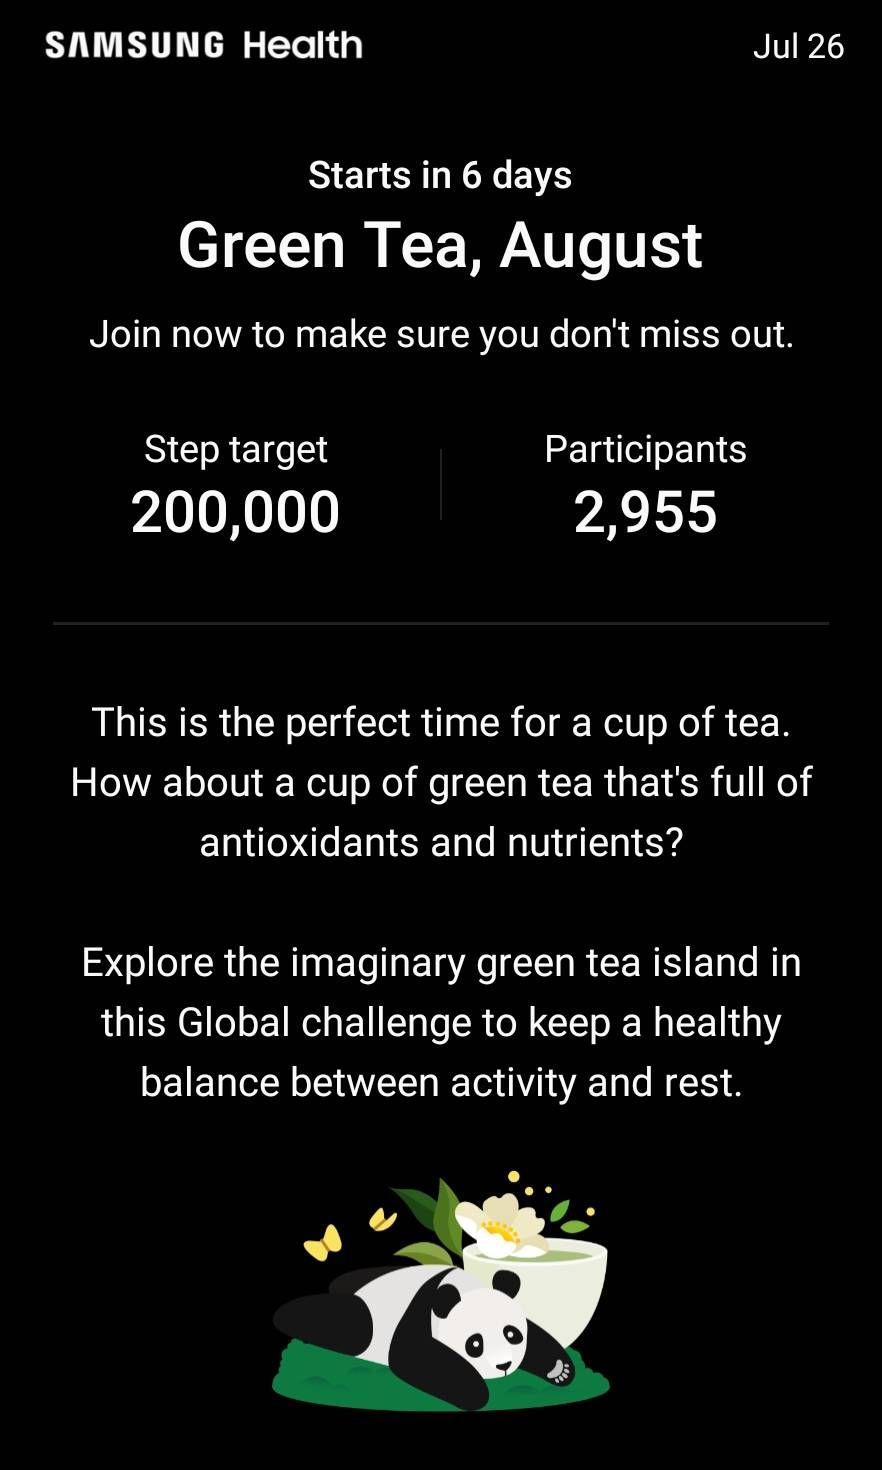 Samsung Health - August Green Tea Island Challenge - Samsung Members